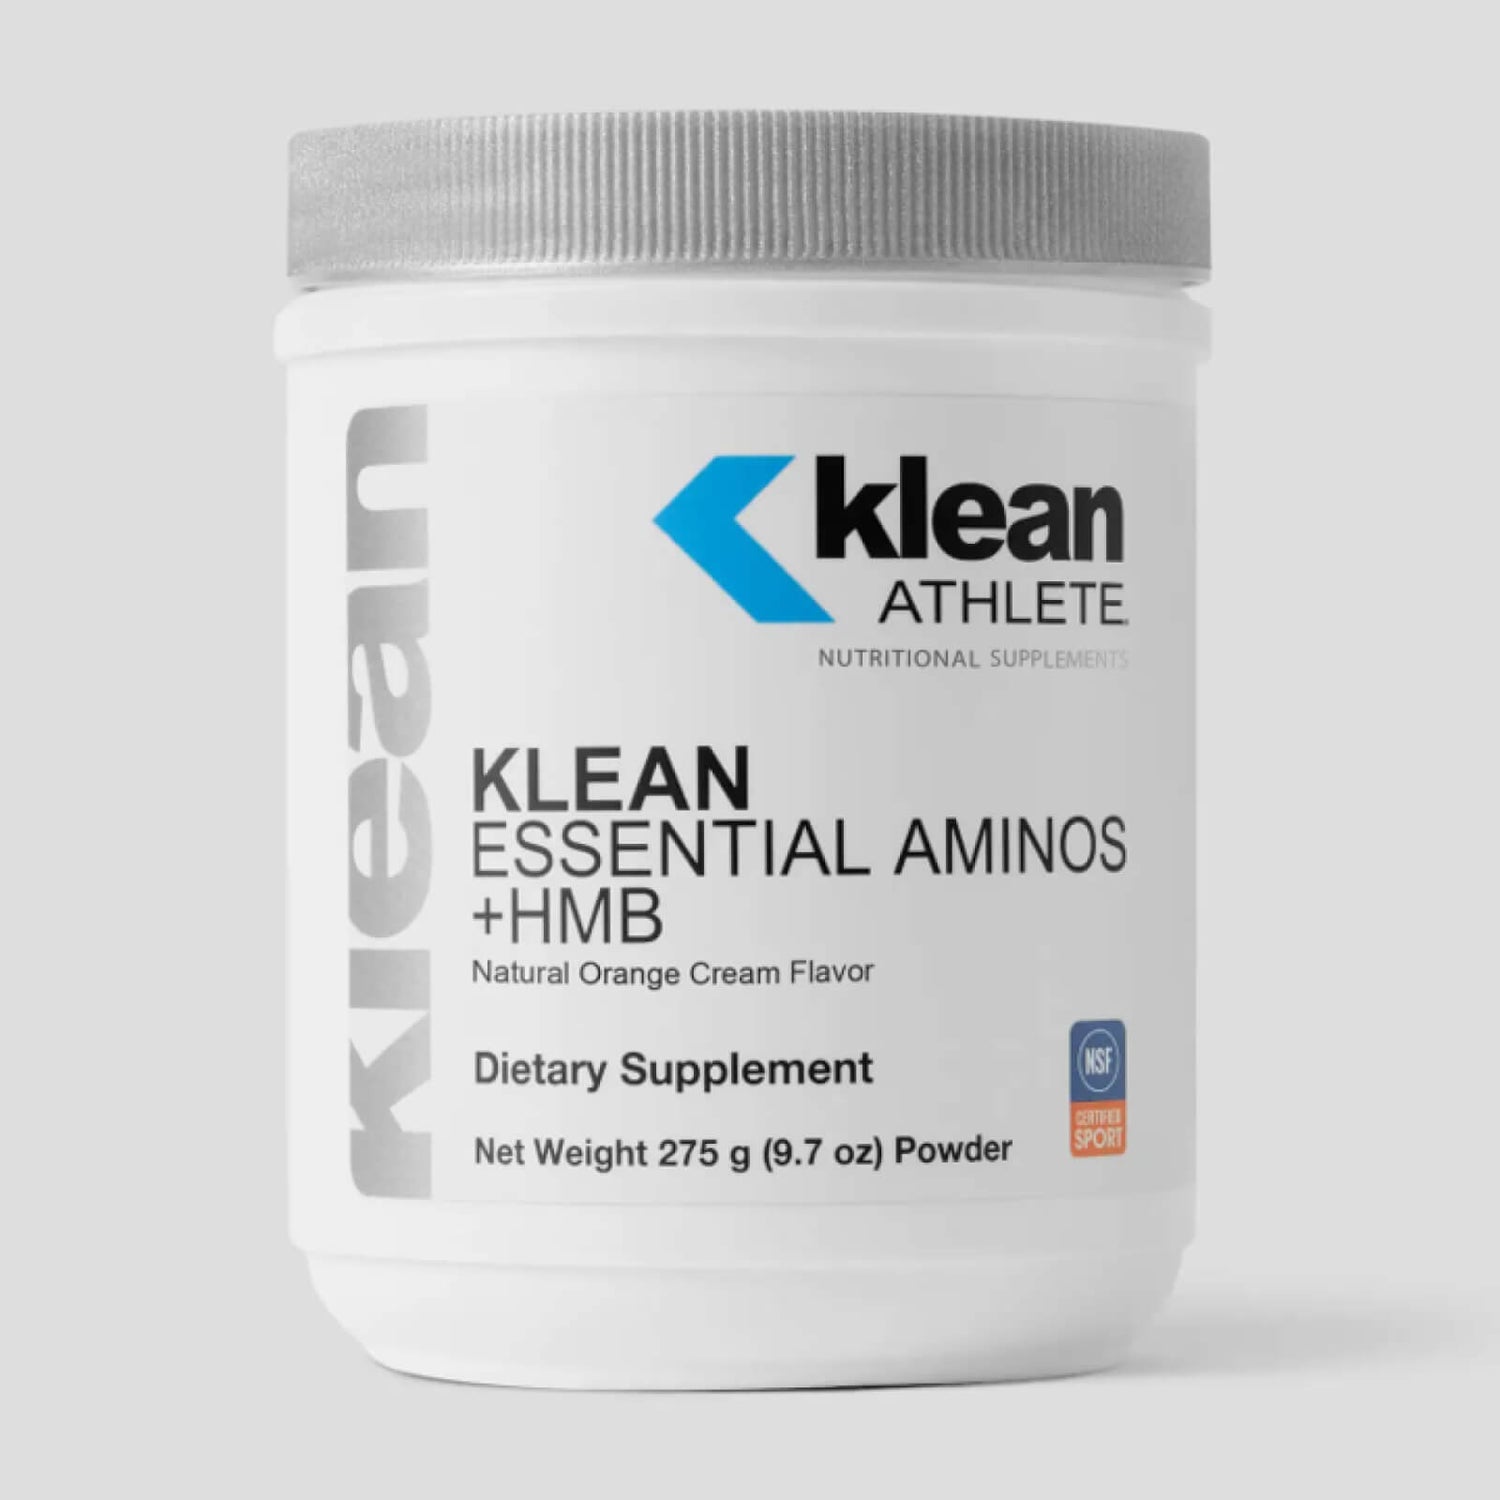 Klean Essential Aminos + HMB - 275g